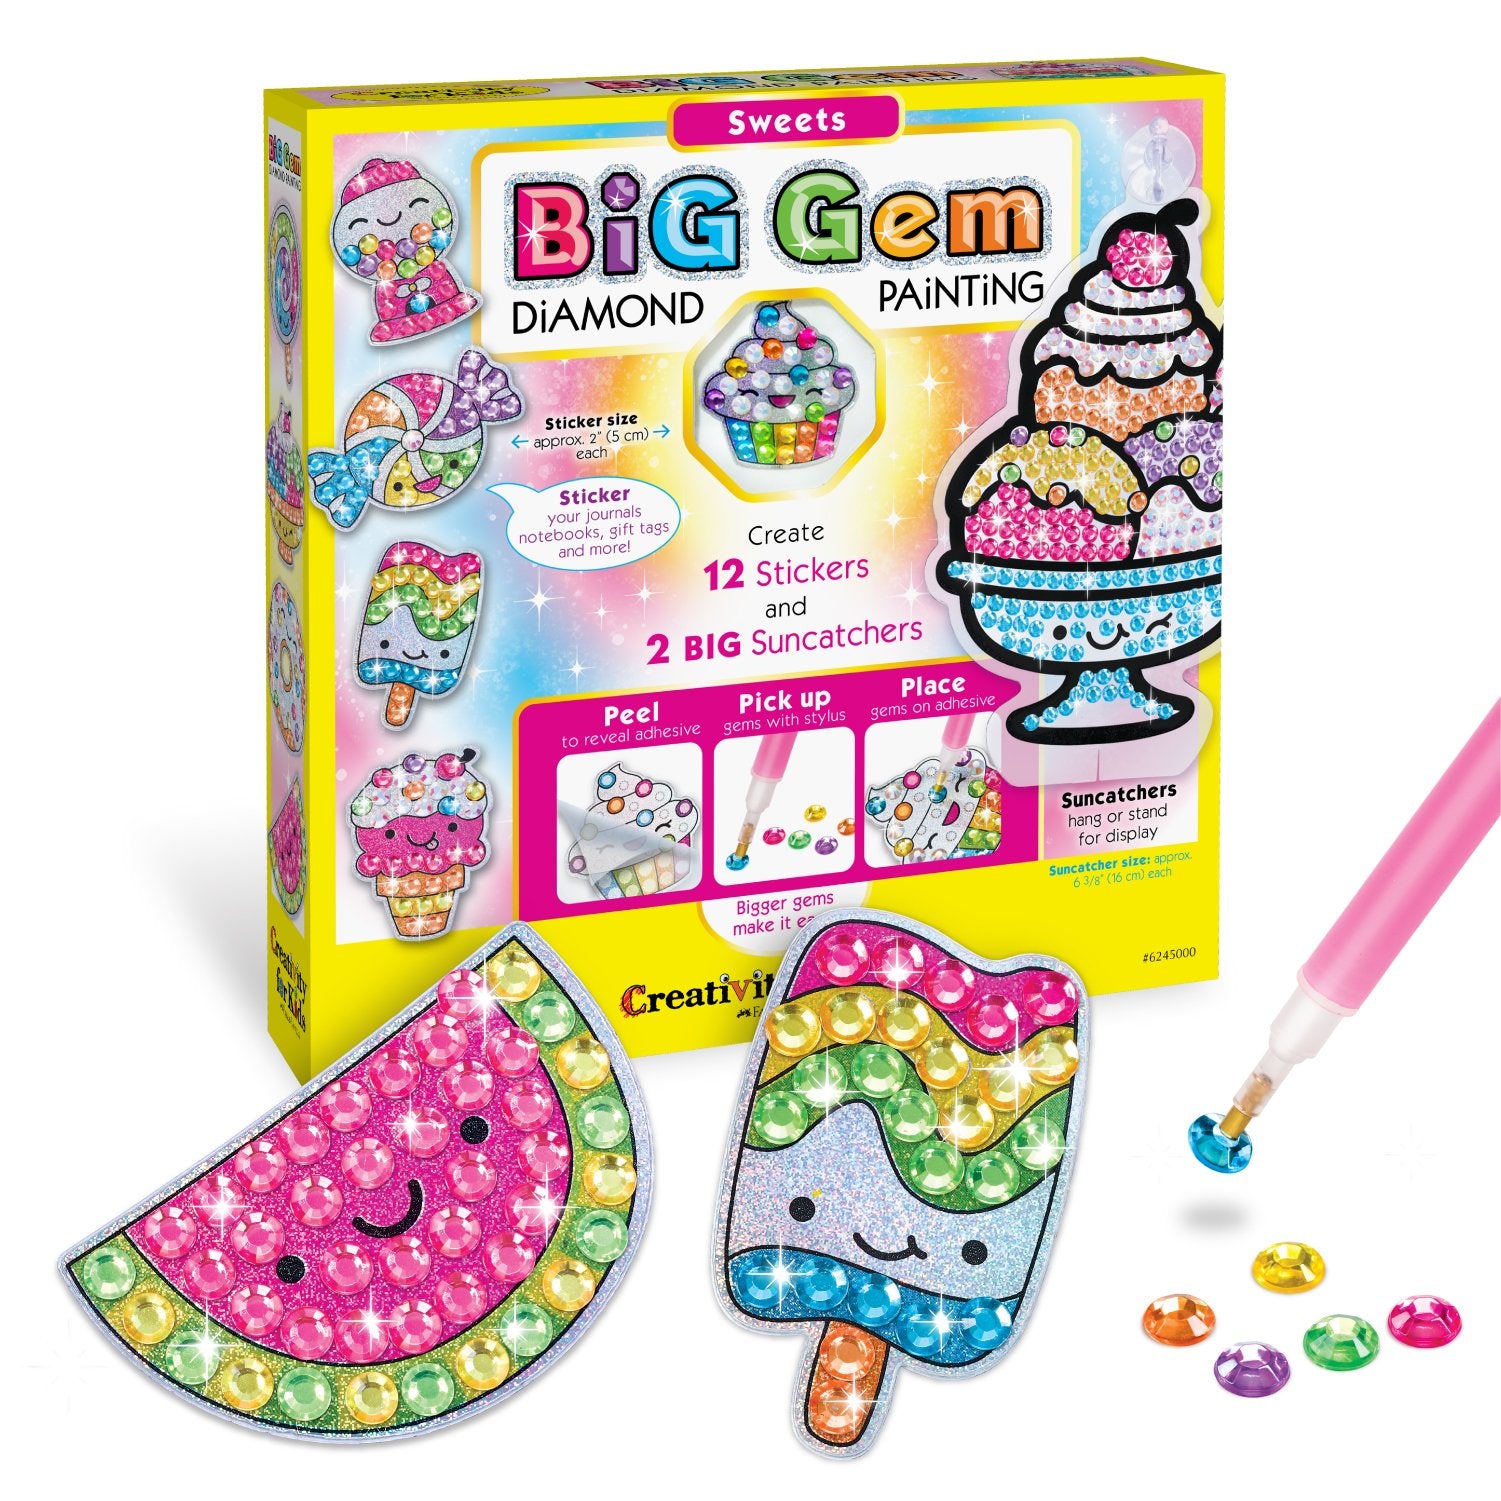 Creativity For Kids Big Gem Diamond Painting Kit - Magical : Target